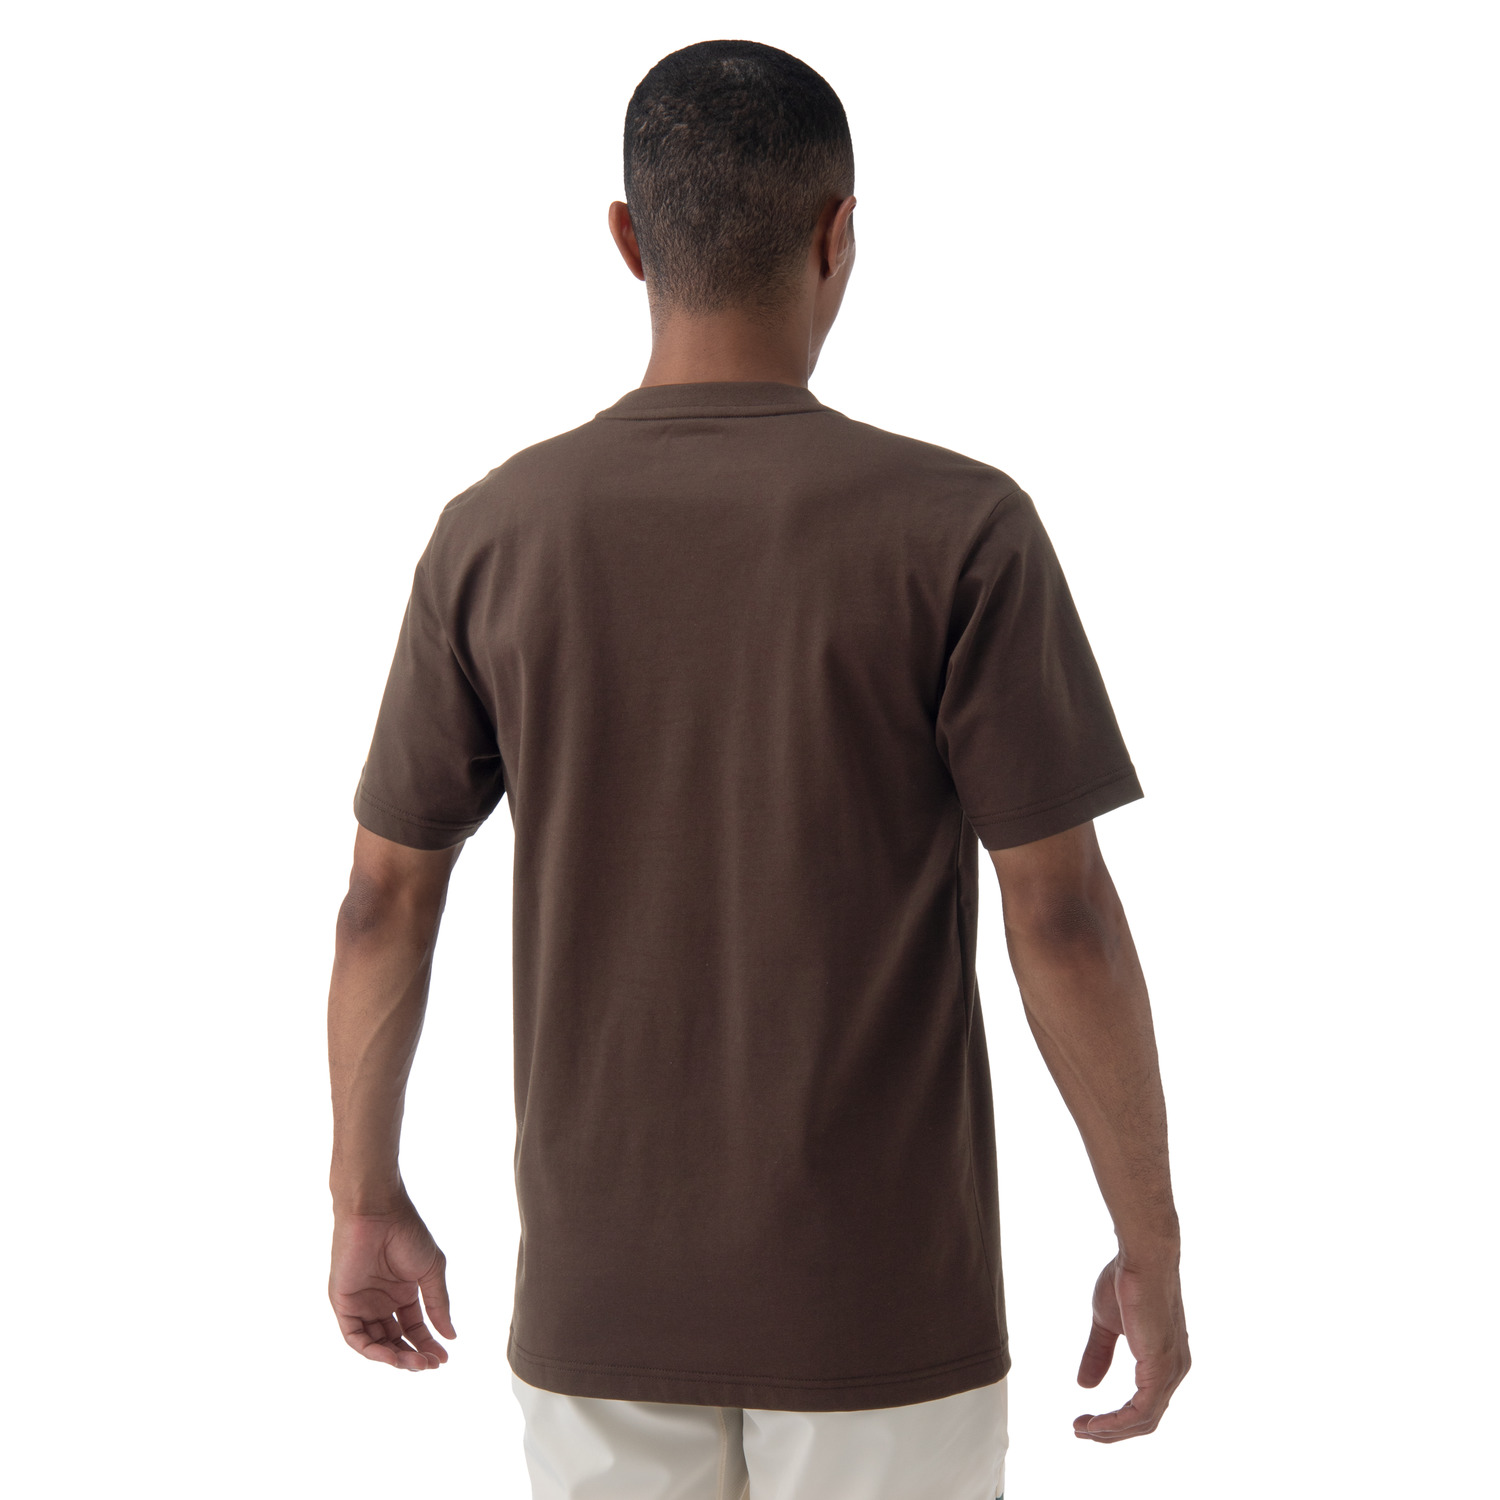 Yonex Nature Series Fashion Shirt 16702NEX Earth Brown MEN'S